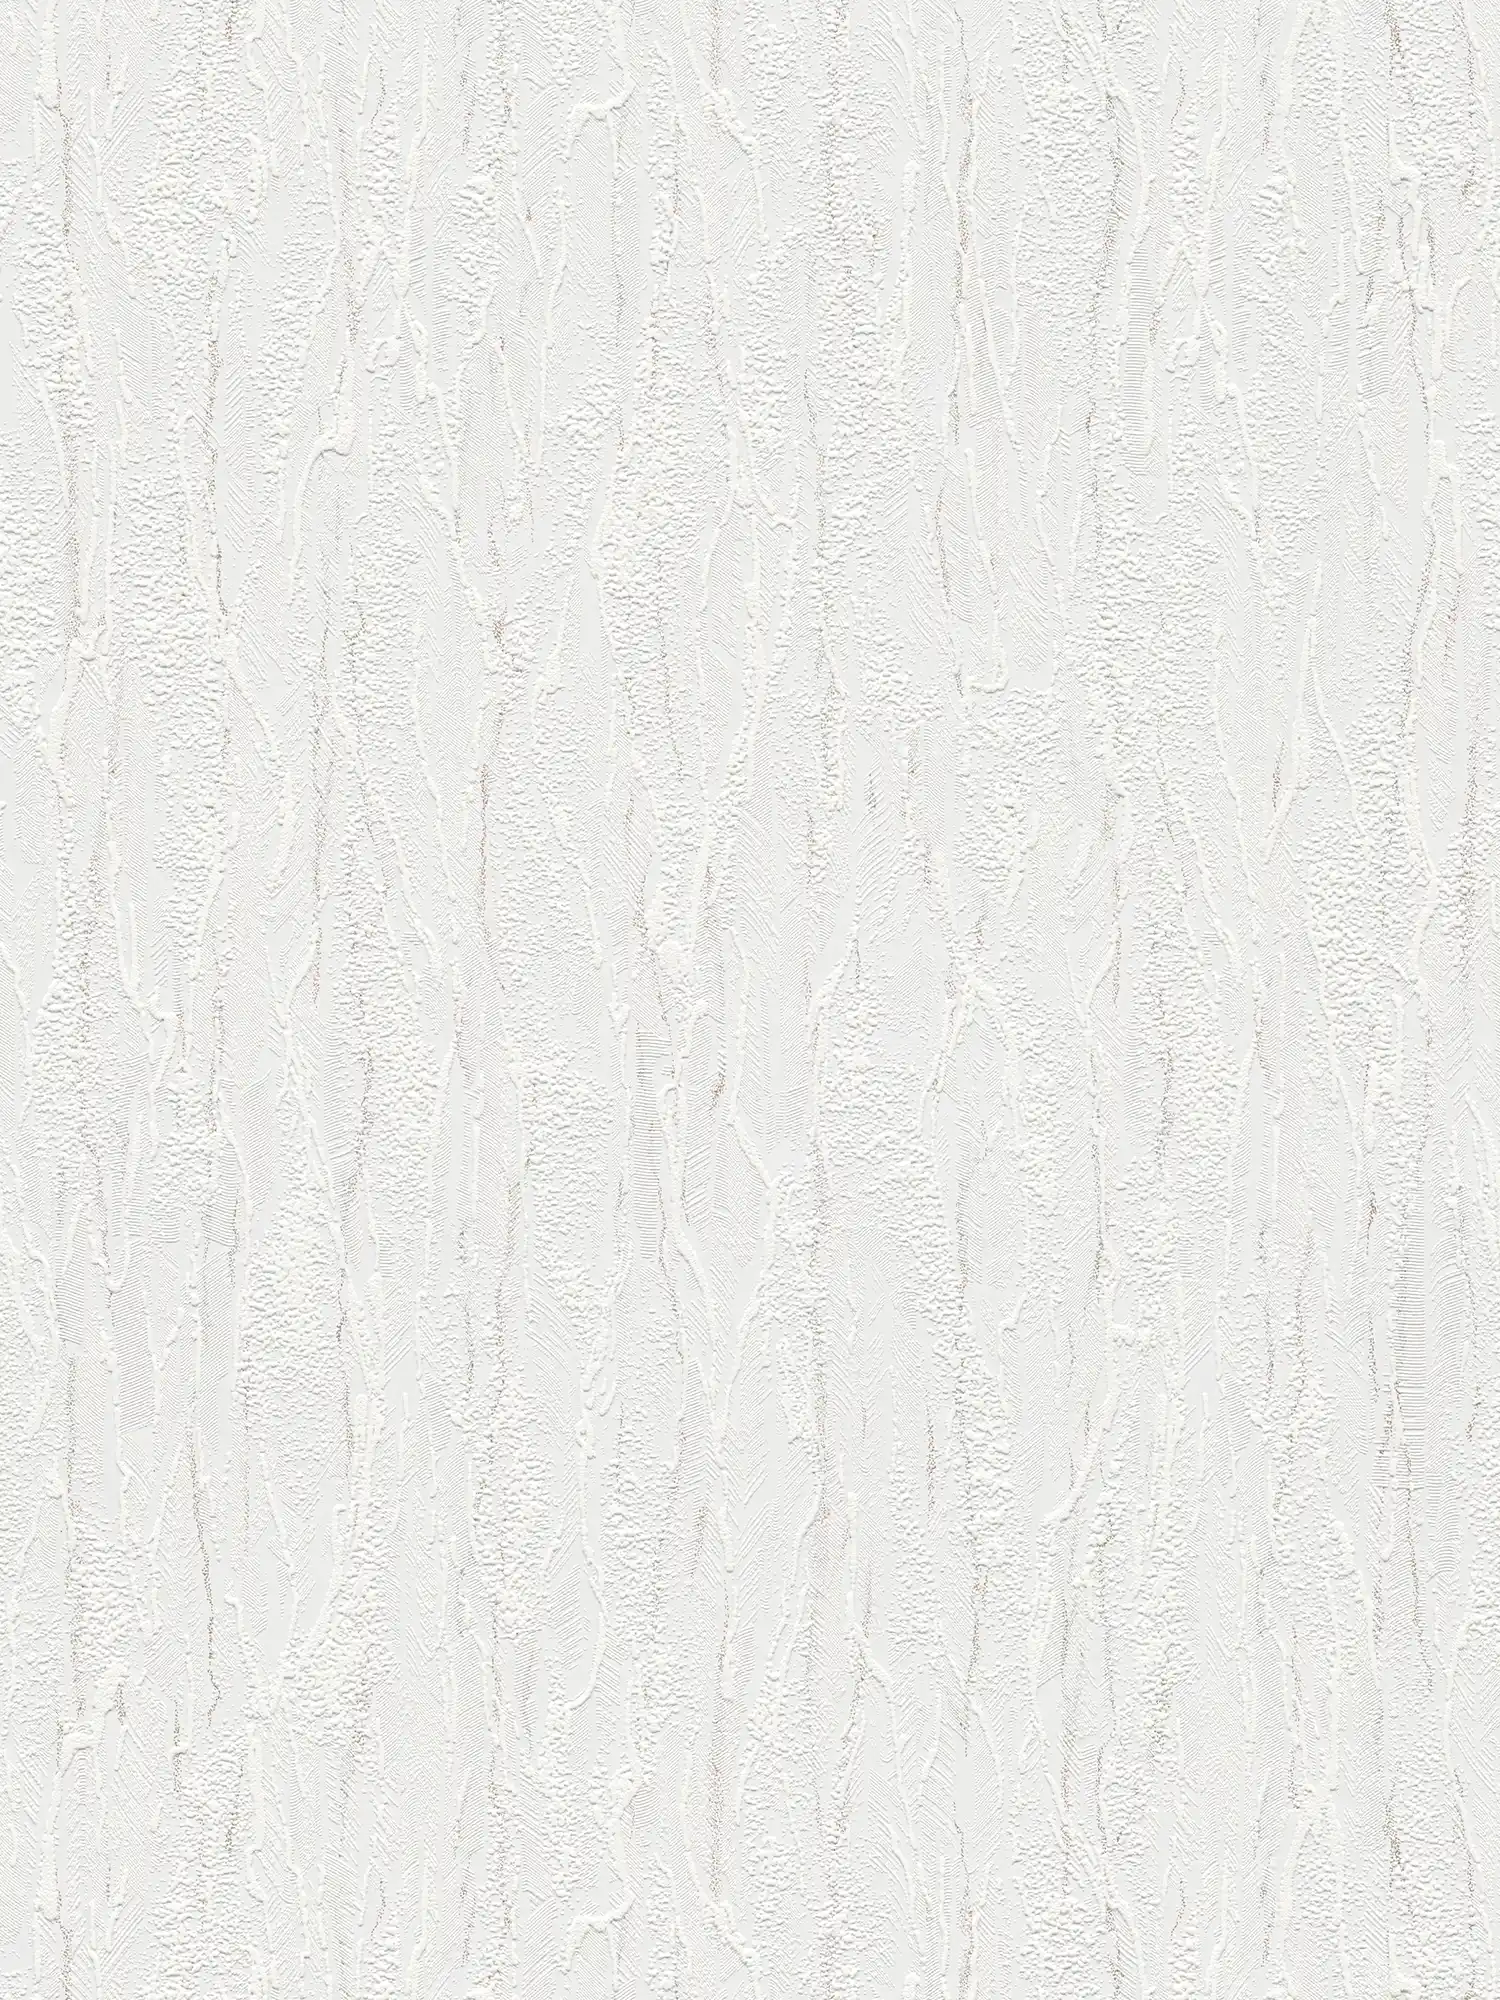 Tapete weißes Strukturmuster, graue Akzente – Weiß
